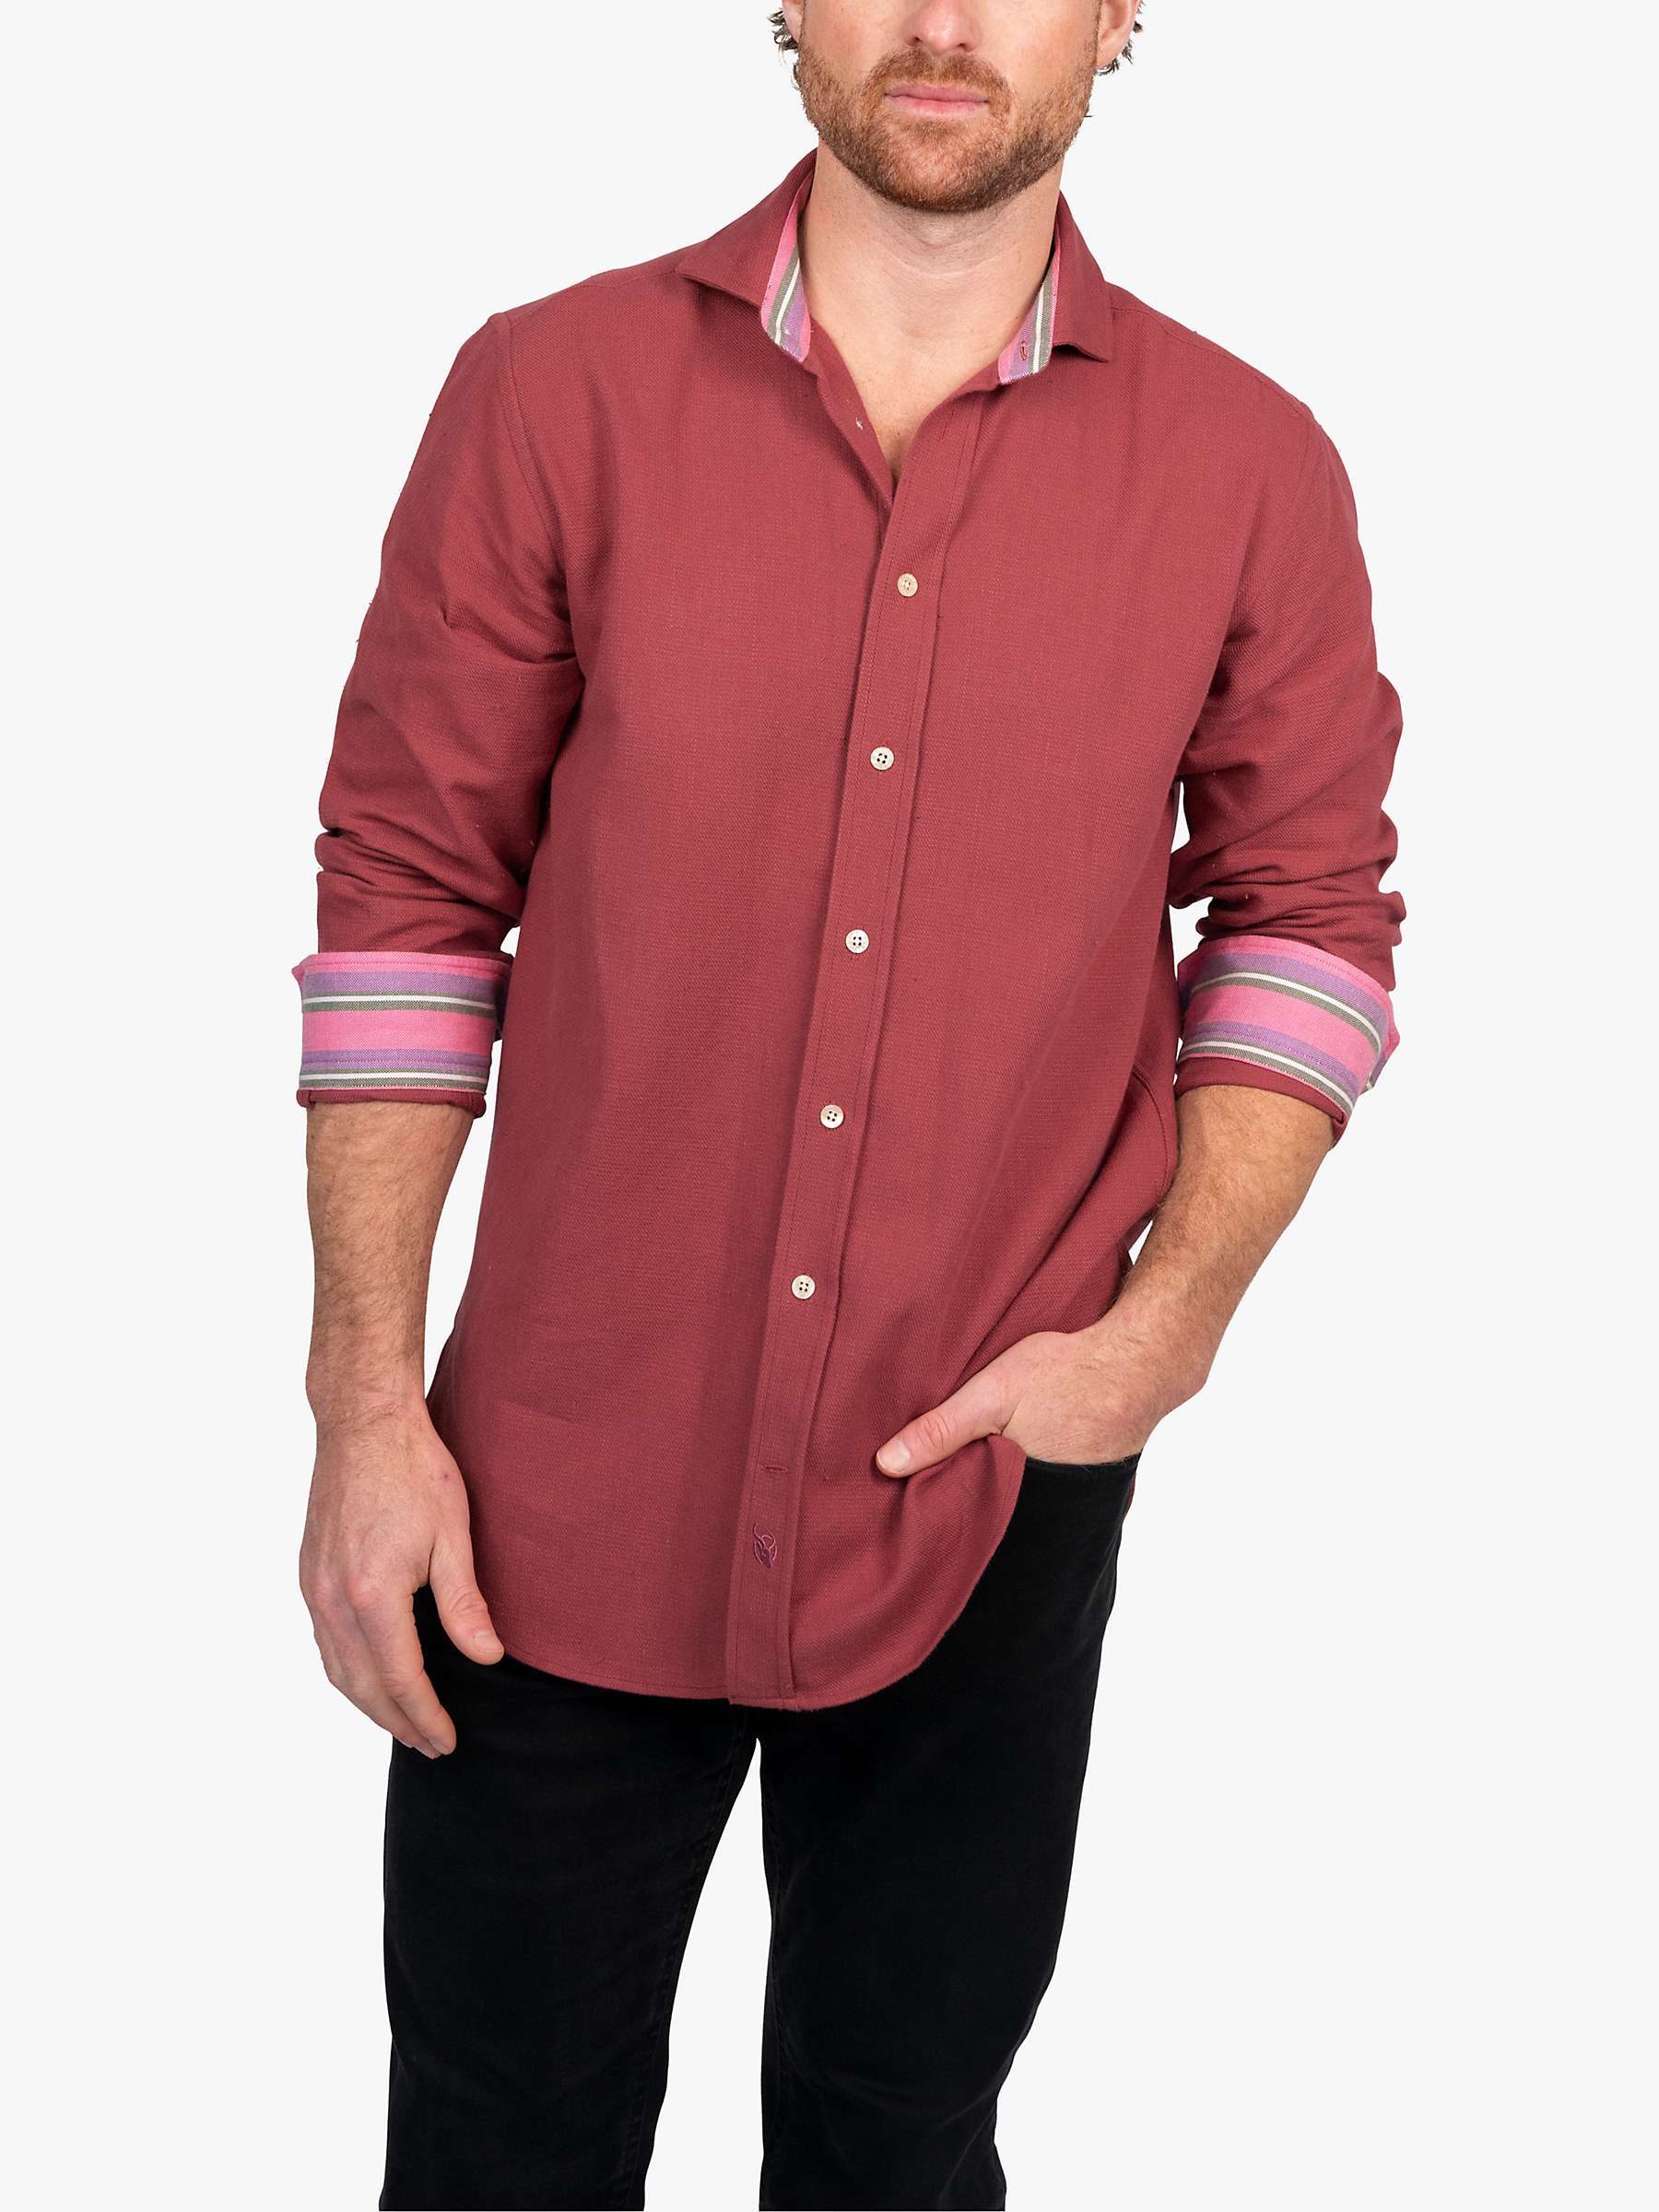 Buy KOY Oxford Cotton Shirt Online at johnlewis.com